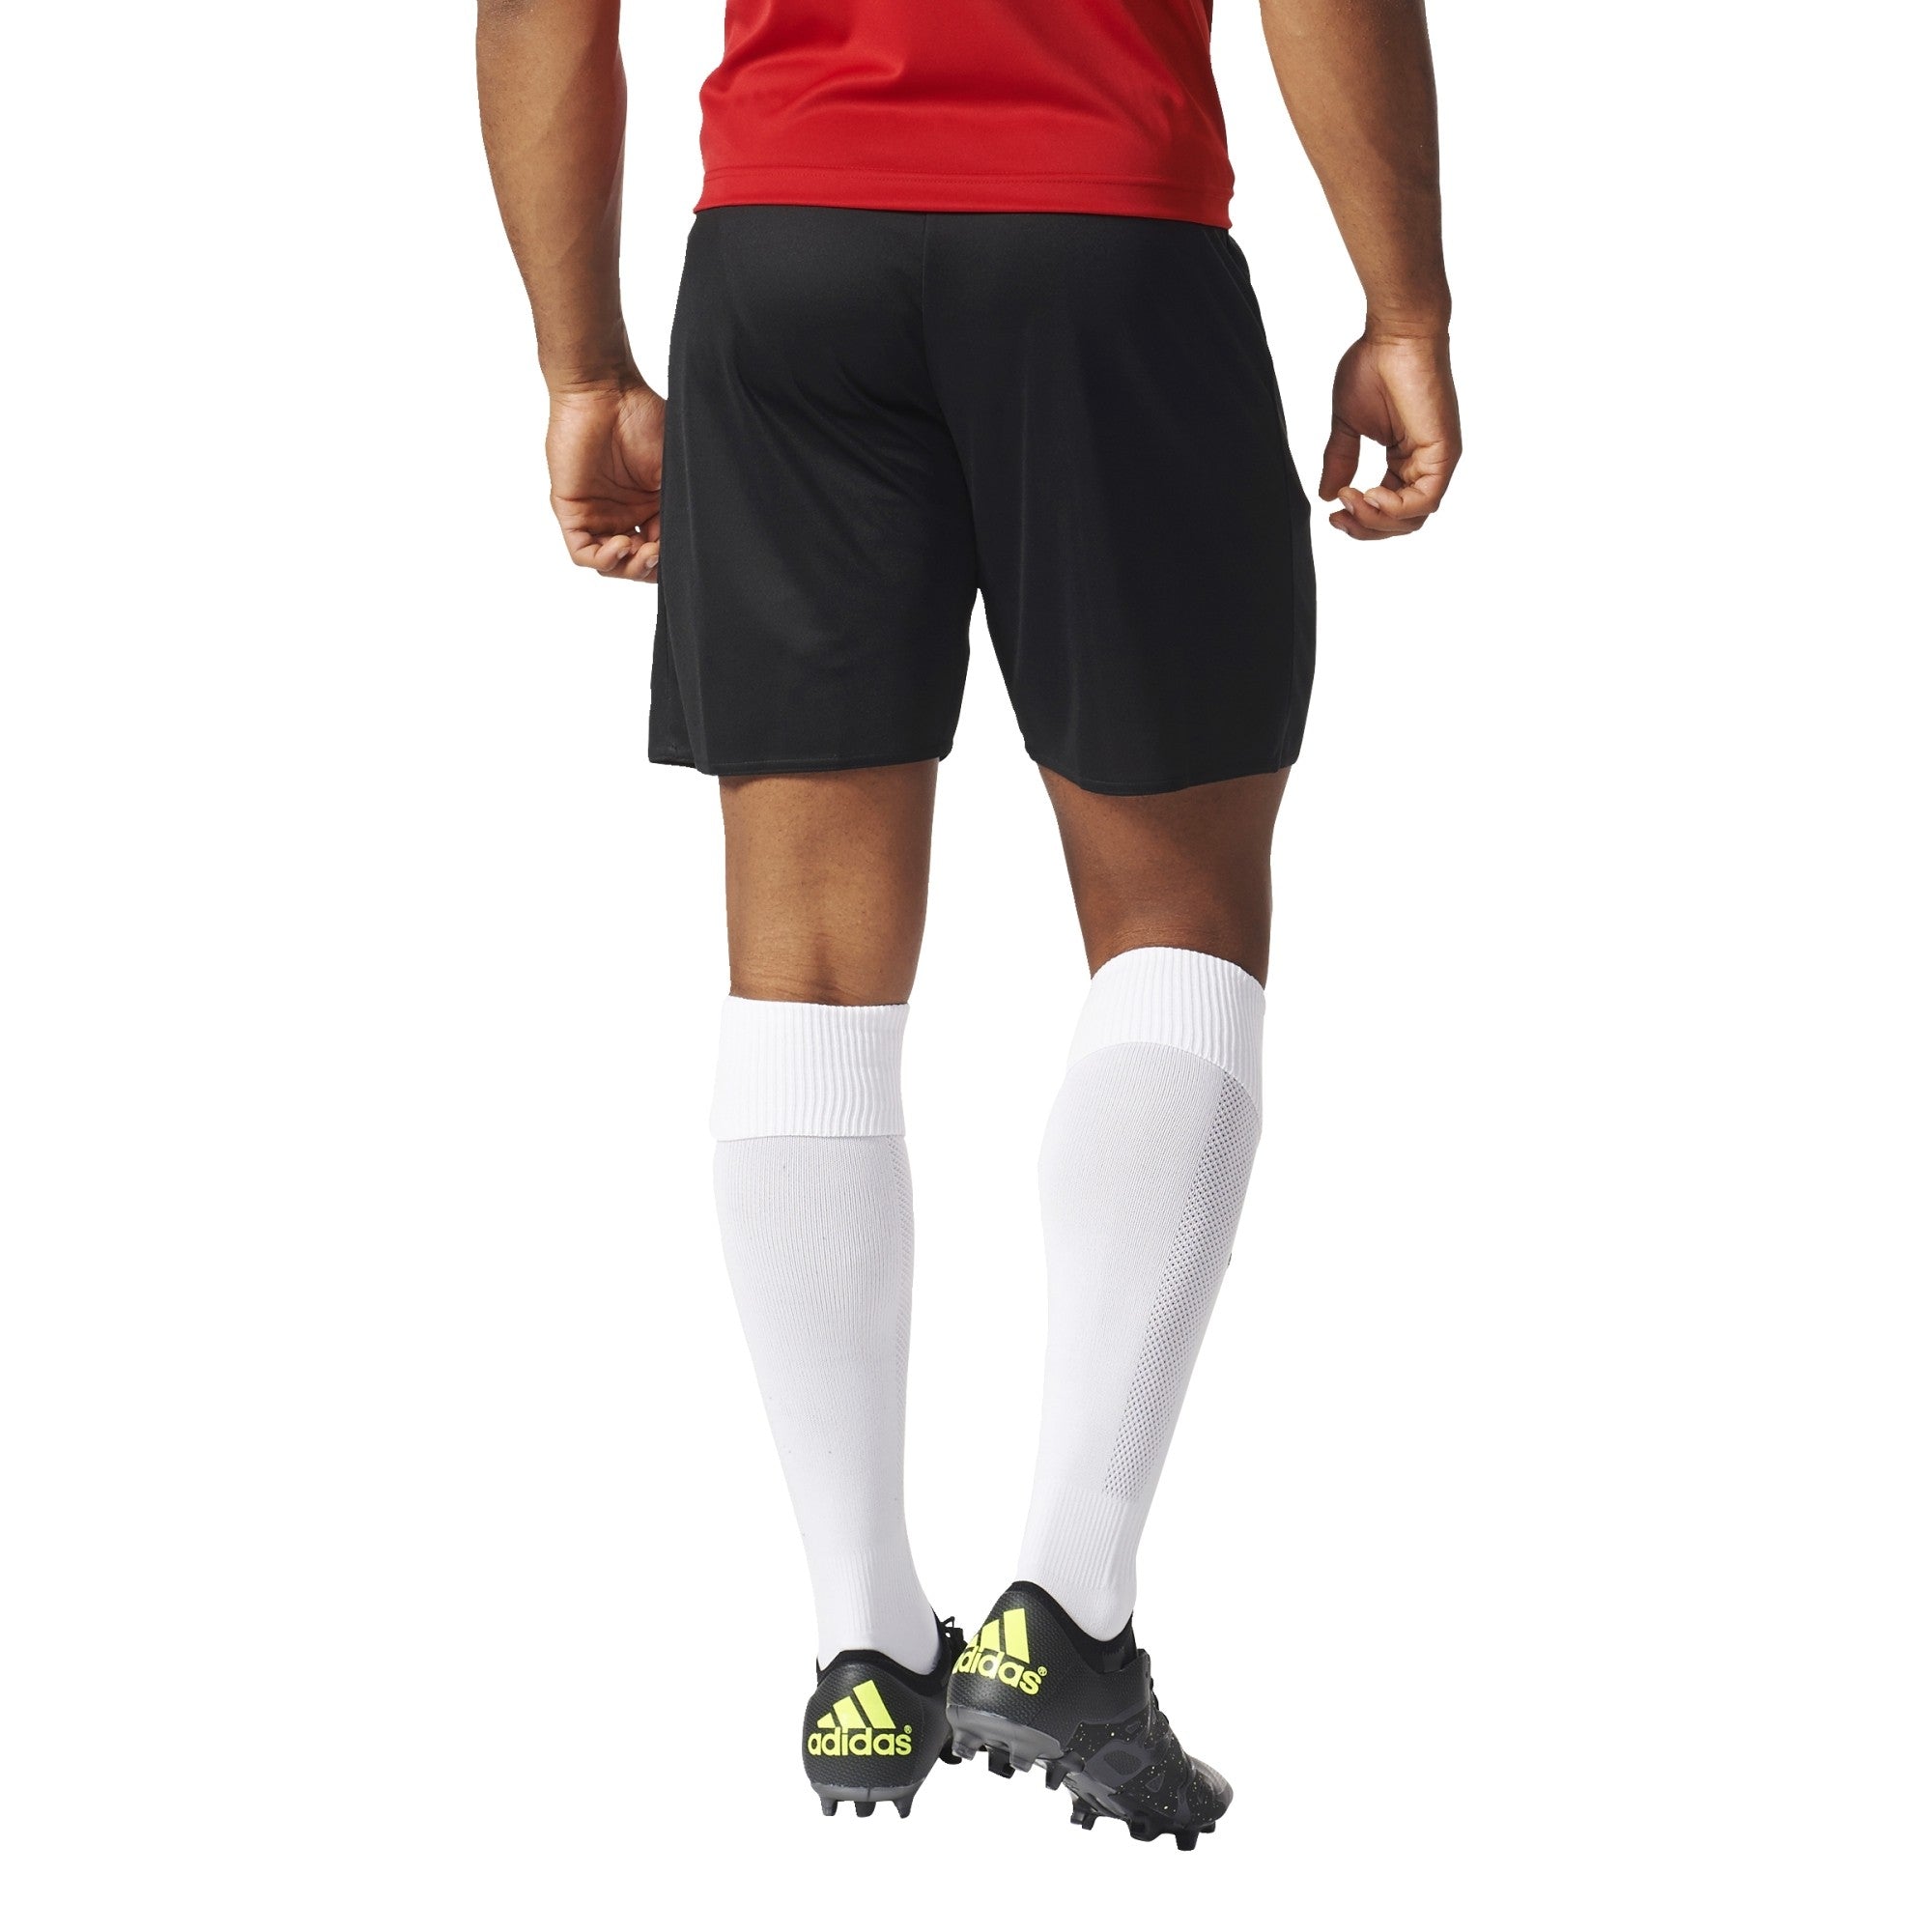 Anterior musical tema adidas Parma Soccer Shorts Black Men's